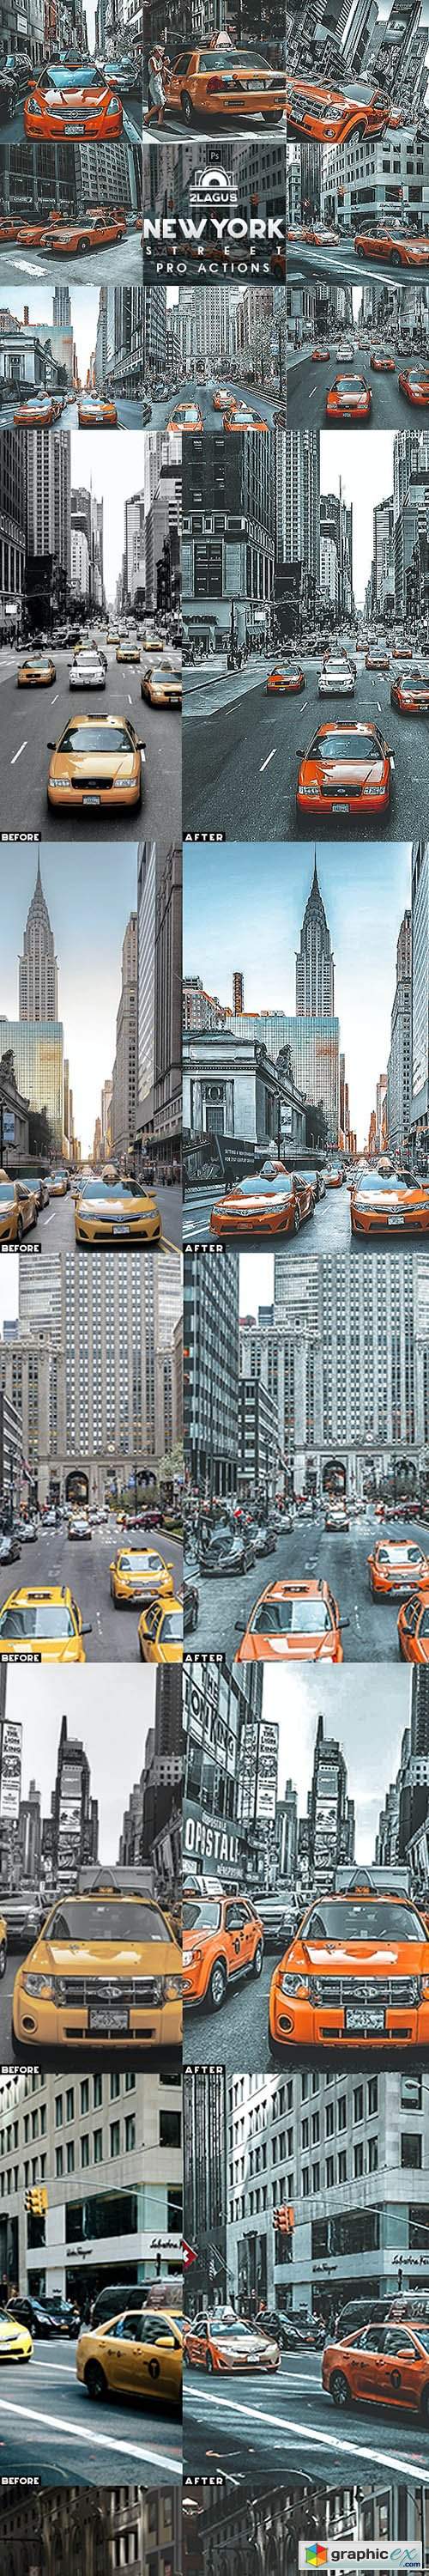 New York Street Photoshop Actions 